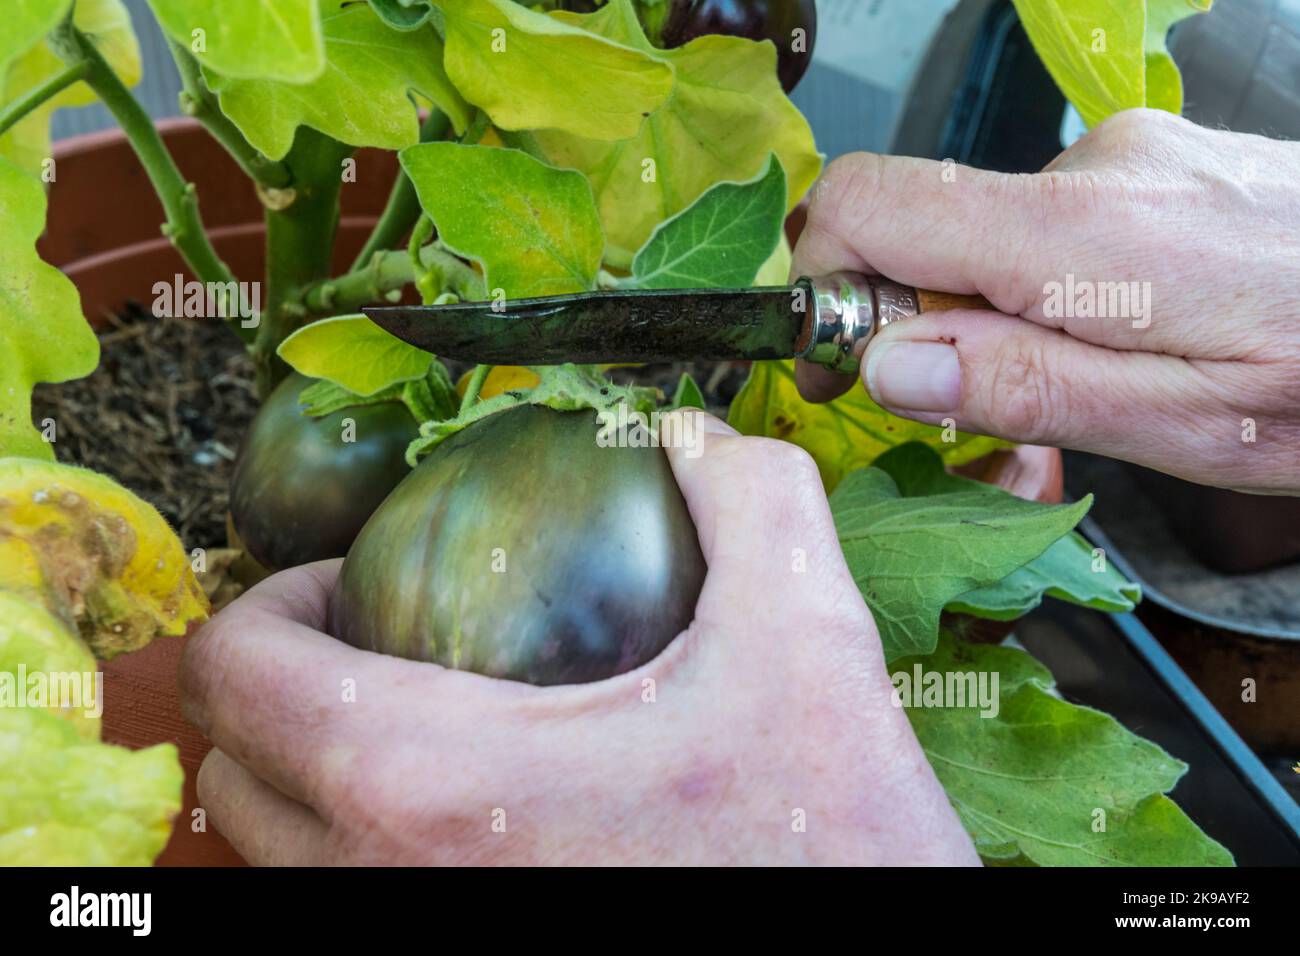 Woman harvesting a homegrown aubergine, Solanum melongena. Stock Photo